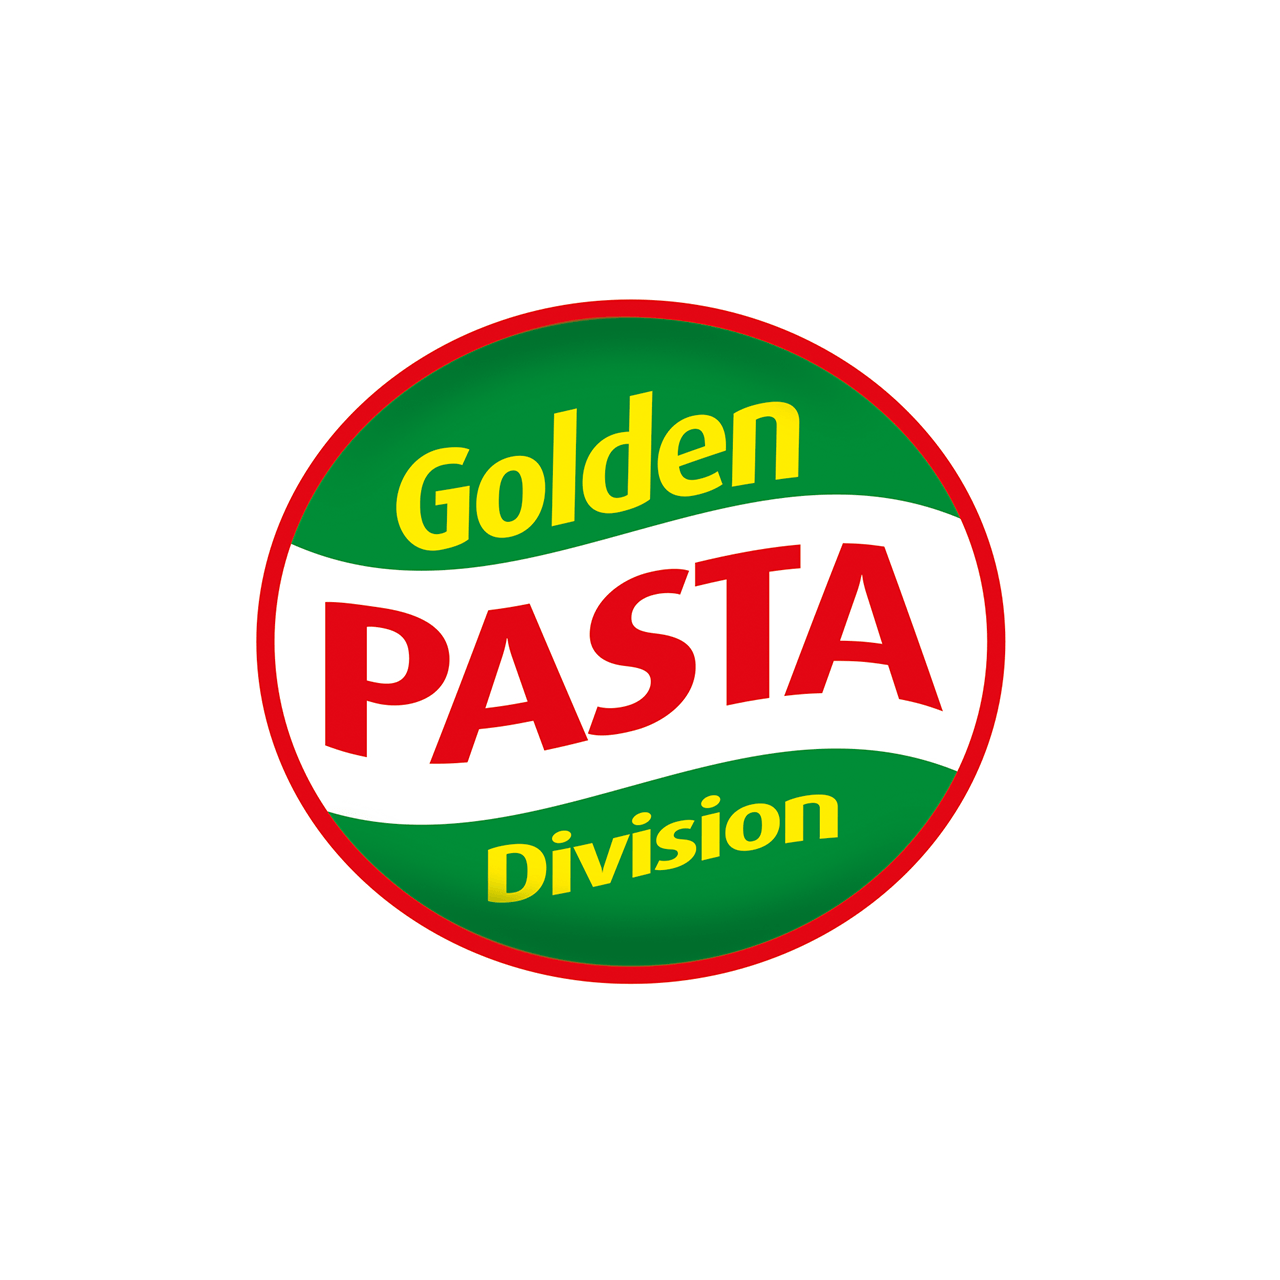 Golden Penny Logo - Golden Pasta Division